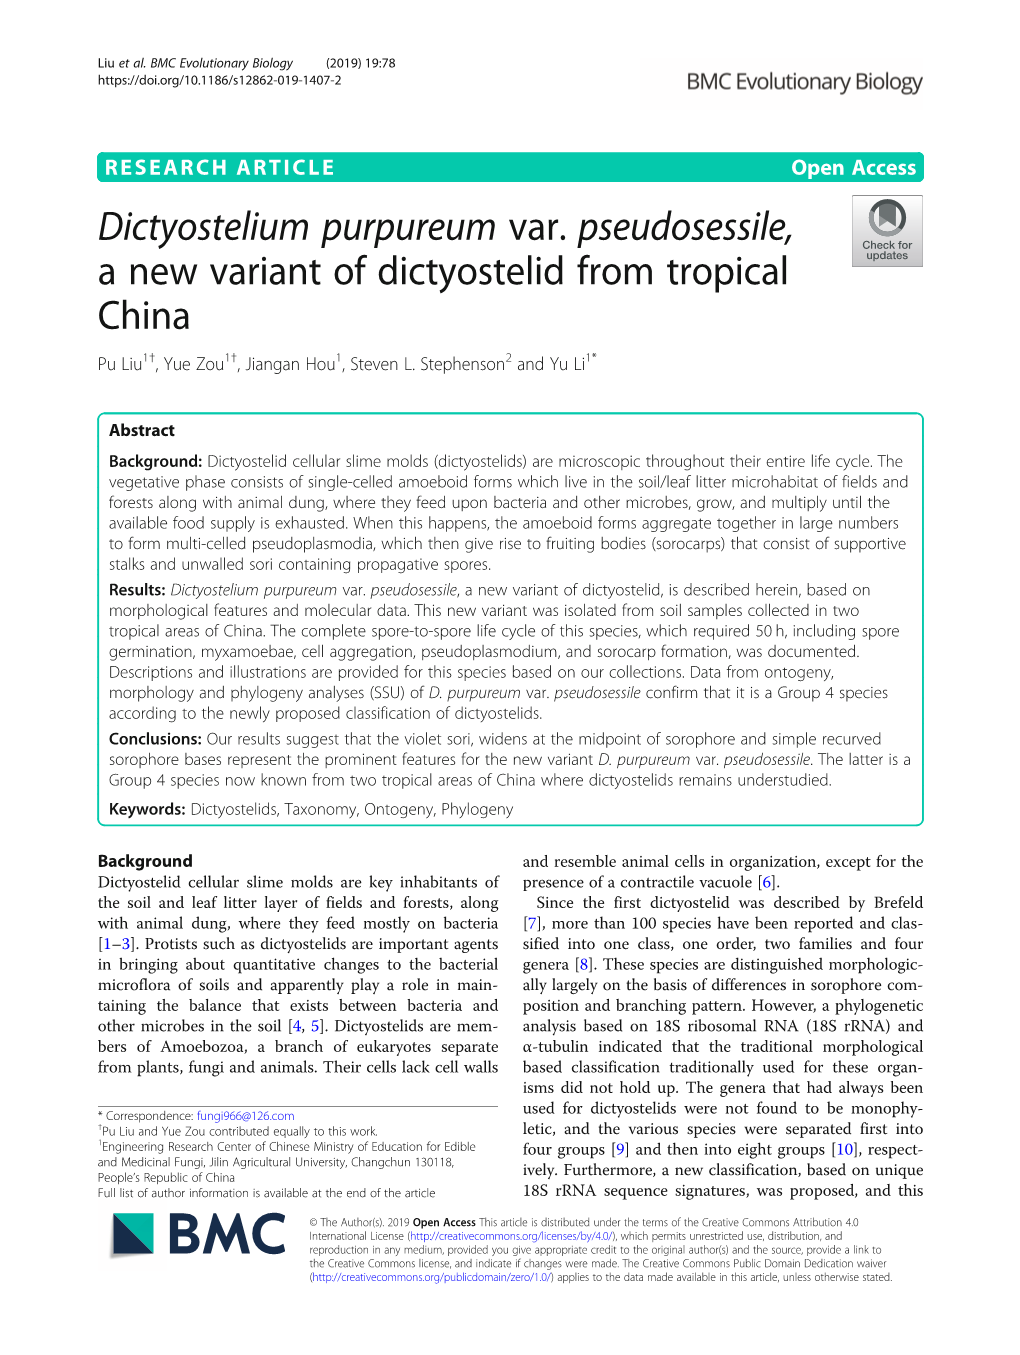 Dictyostelium Purpureum Var. Pseudosessile, a New Variant of Dictyostelid from Tropical China Pu Liu1†, Yue Zou1†, Jiangan Hou1, Steven L